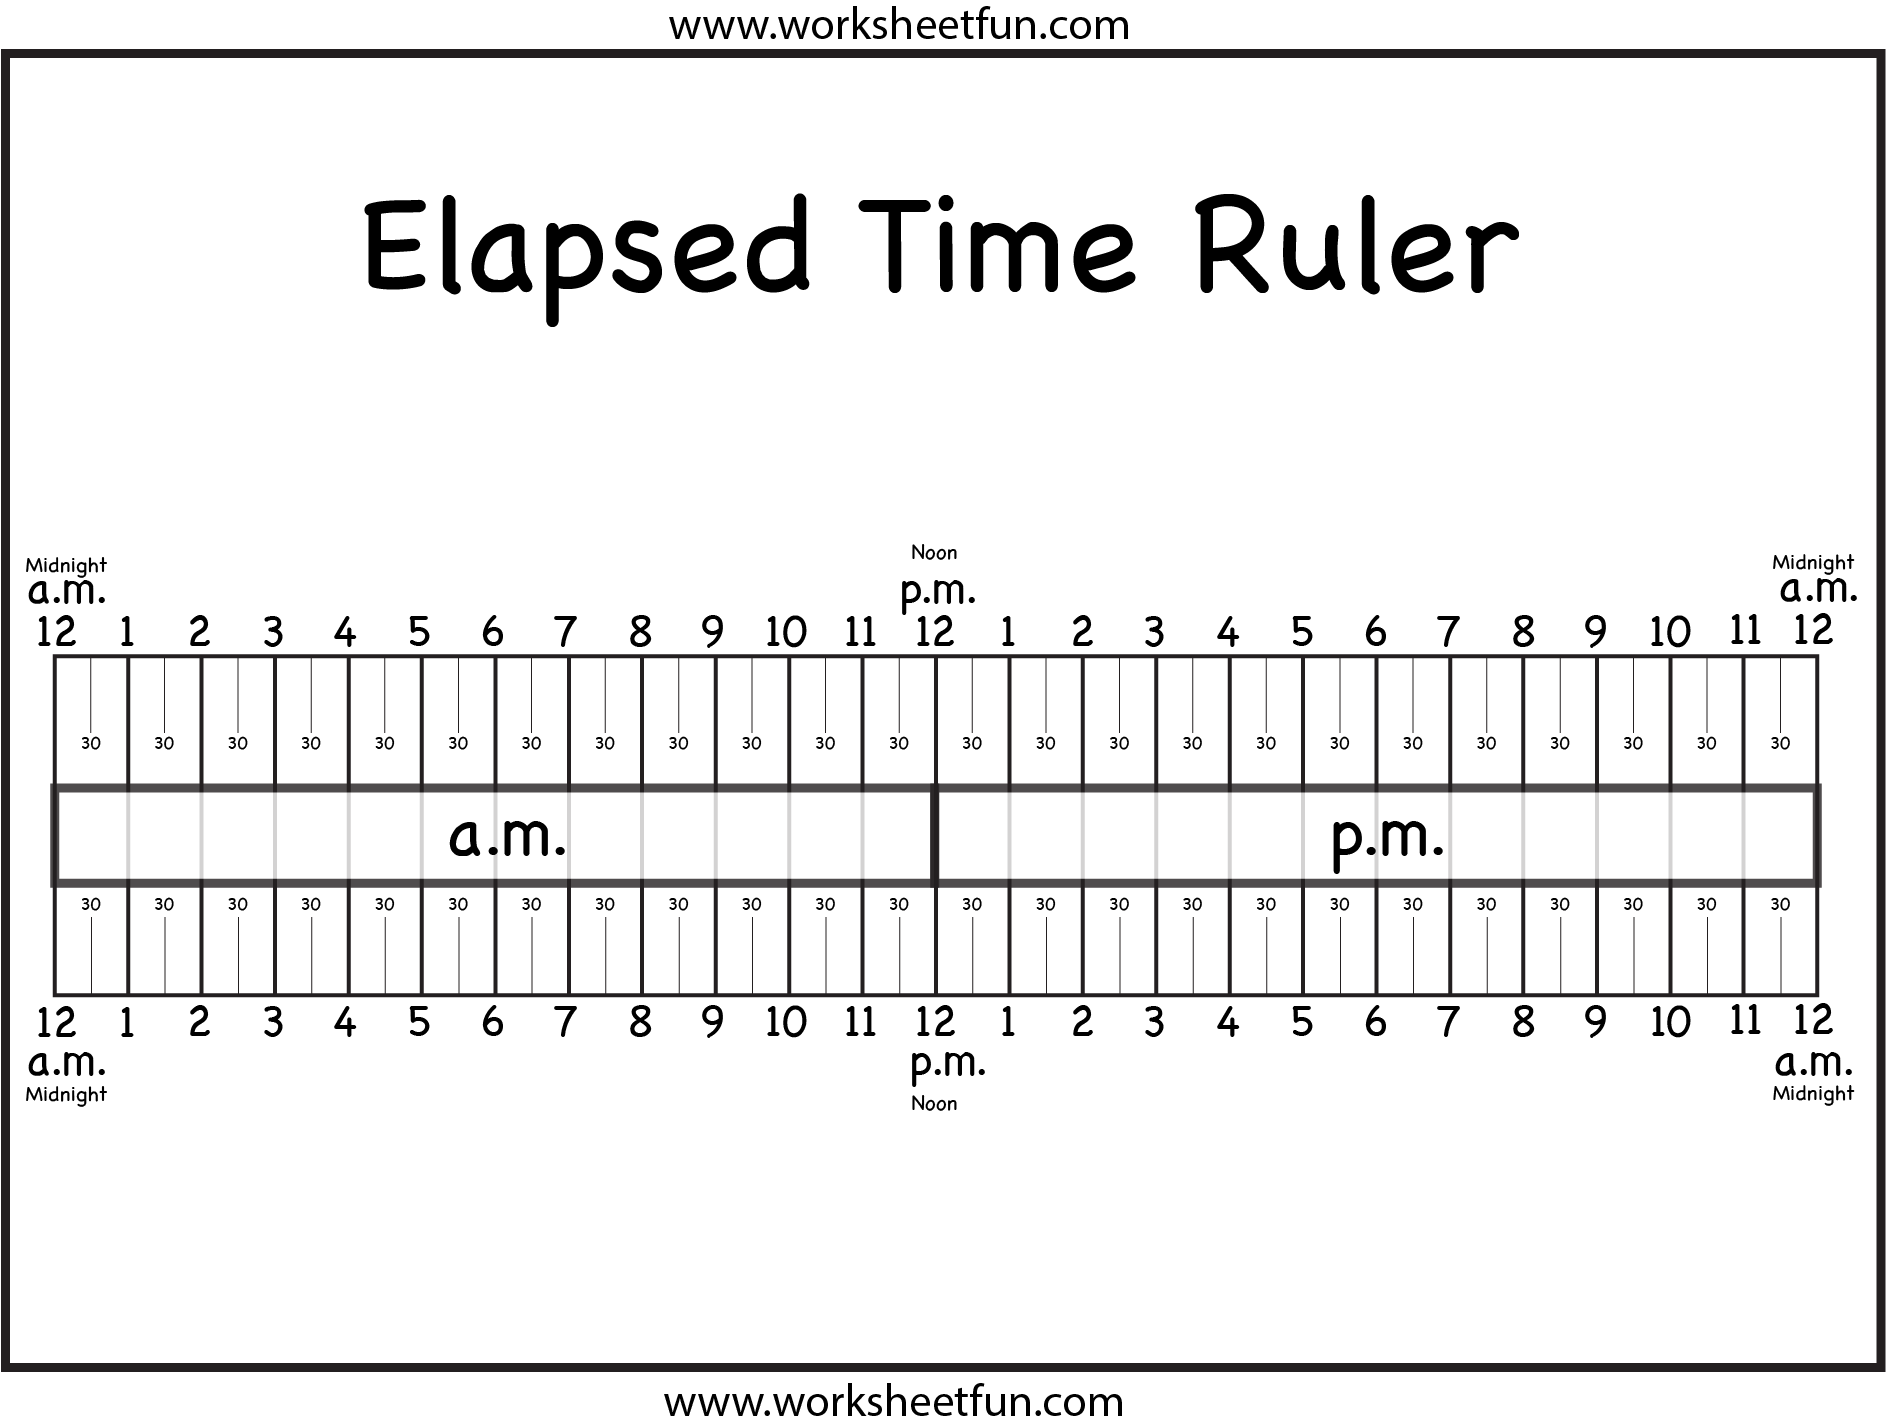 Elapsed Time Ruler Printable Image